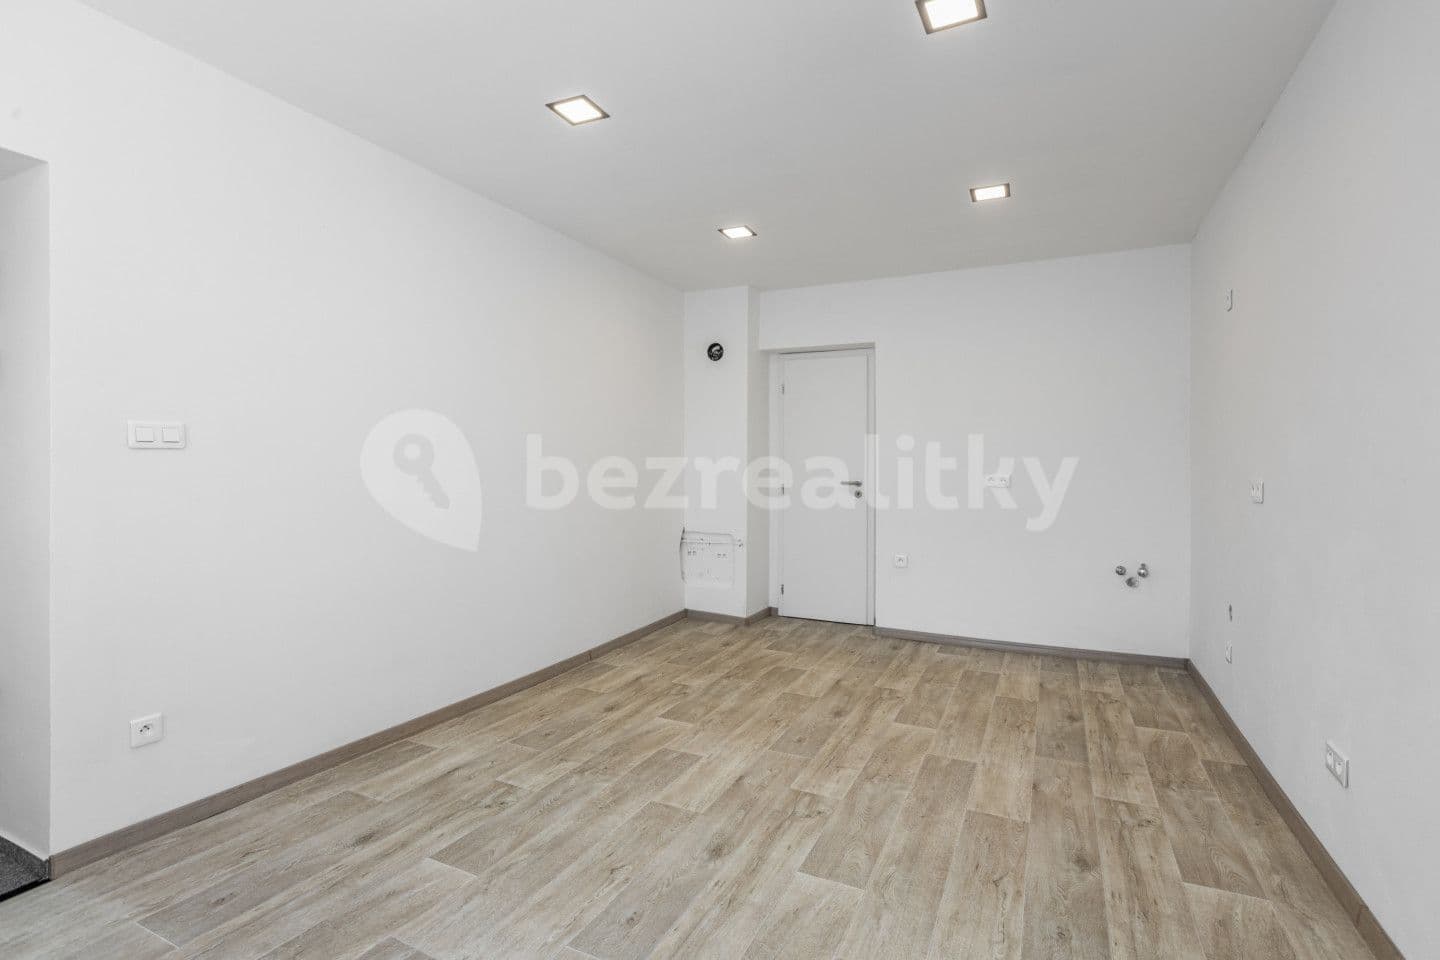 Predaj bytu 2-izbový 49 m², Slavětín nad Metují, Královéhradecký kraj